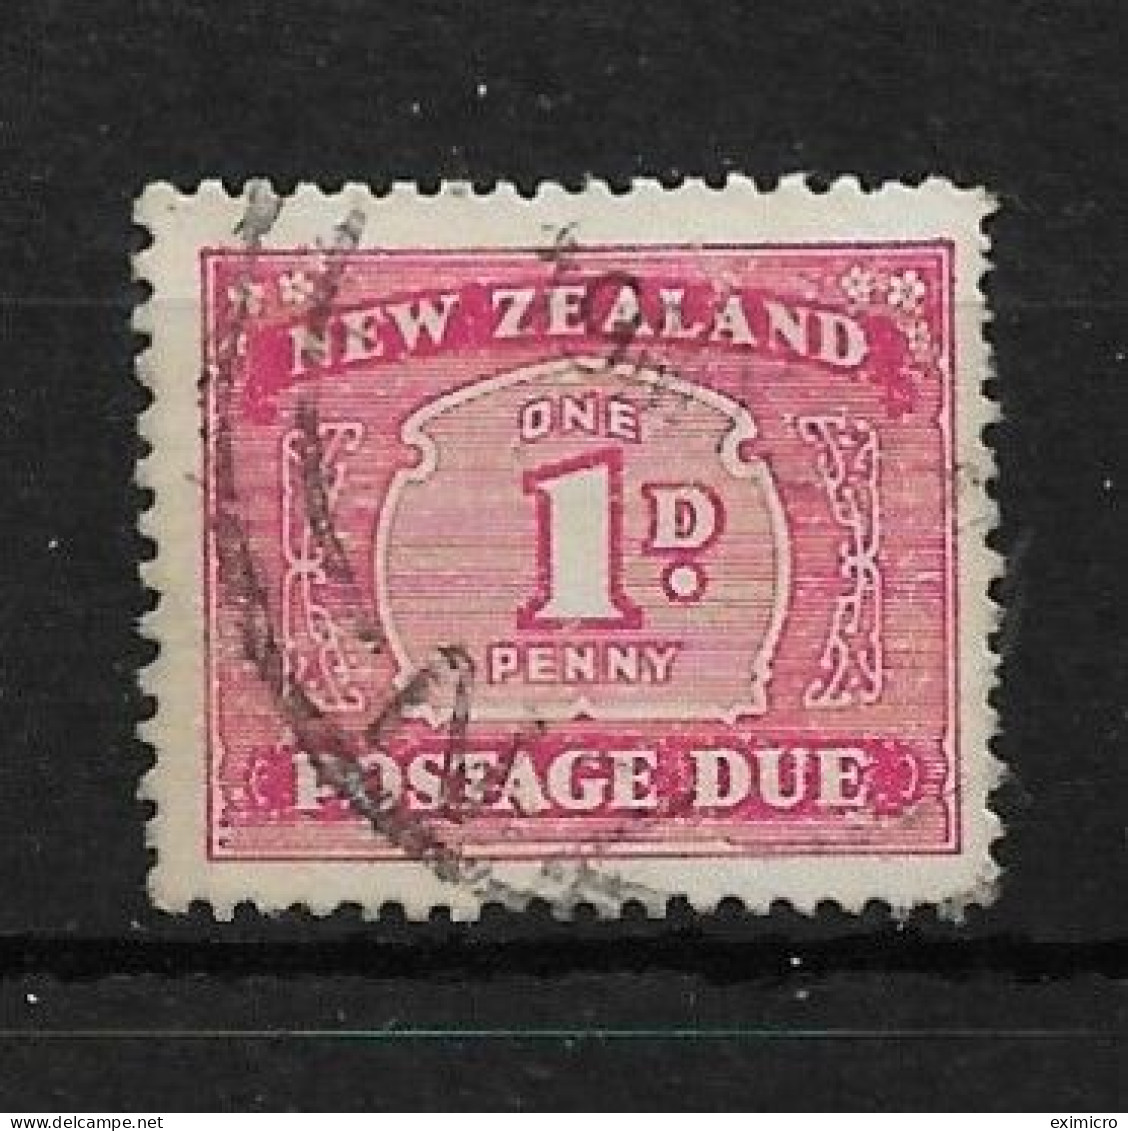 NEW ZEALAND 1939 1d POSTAGE DUE SG D42 FINE USED Cat £2.50 - Portomarken